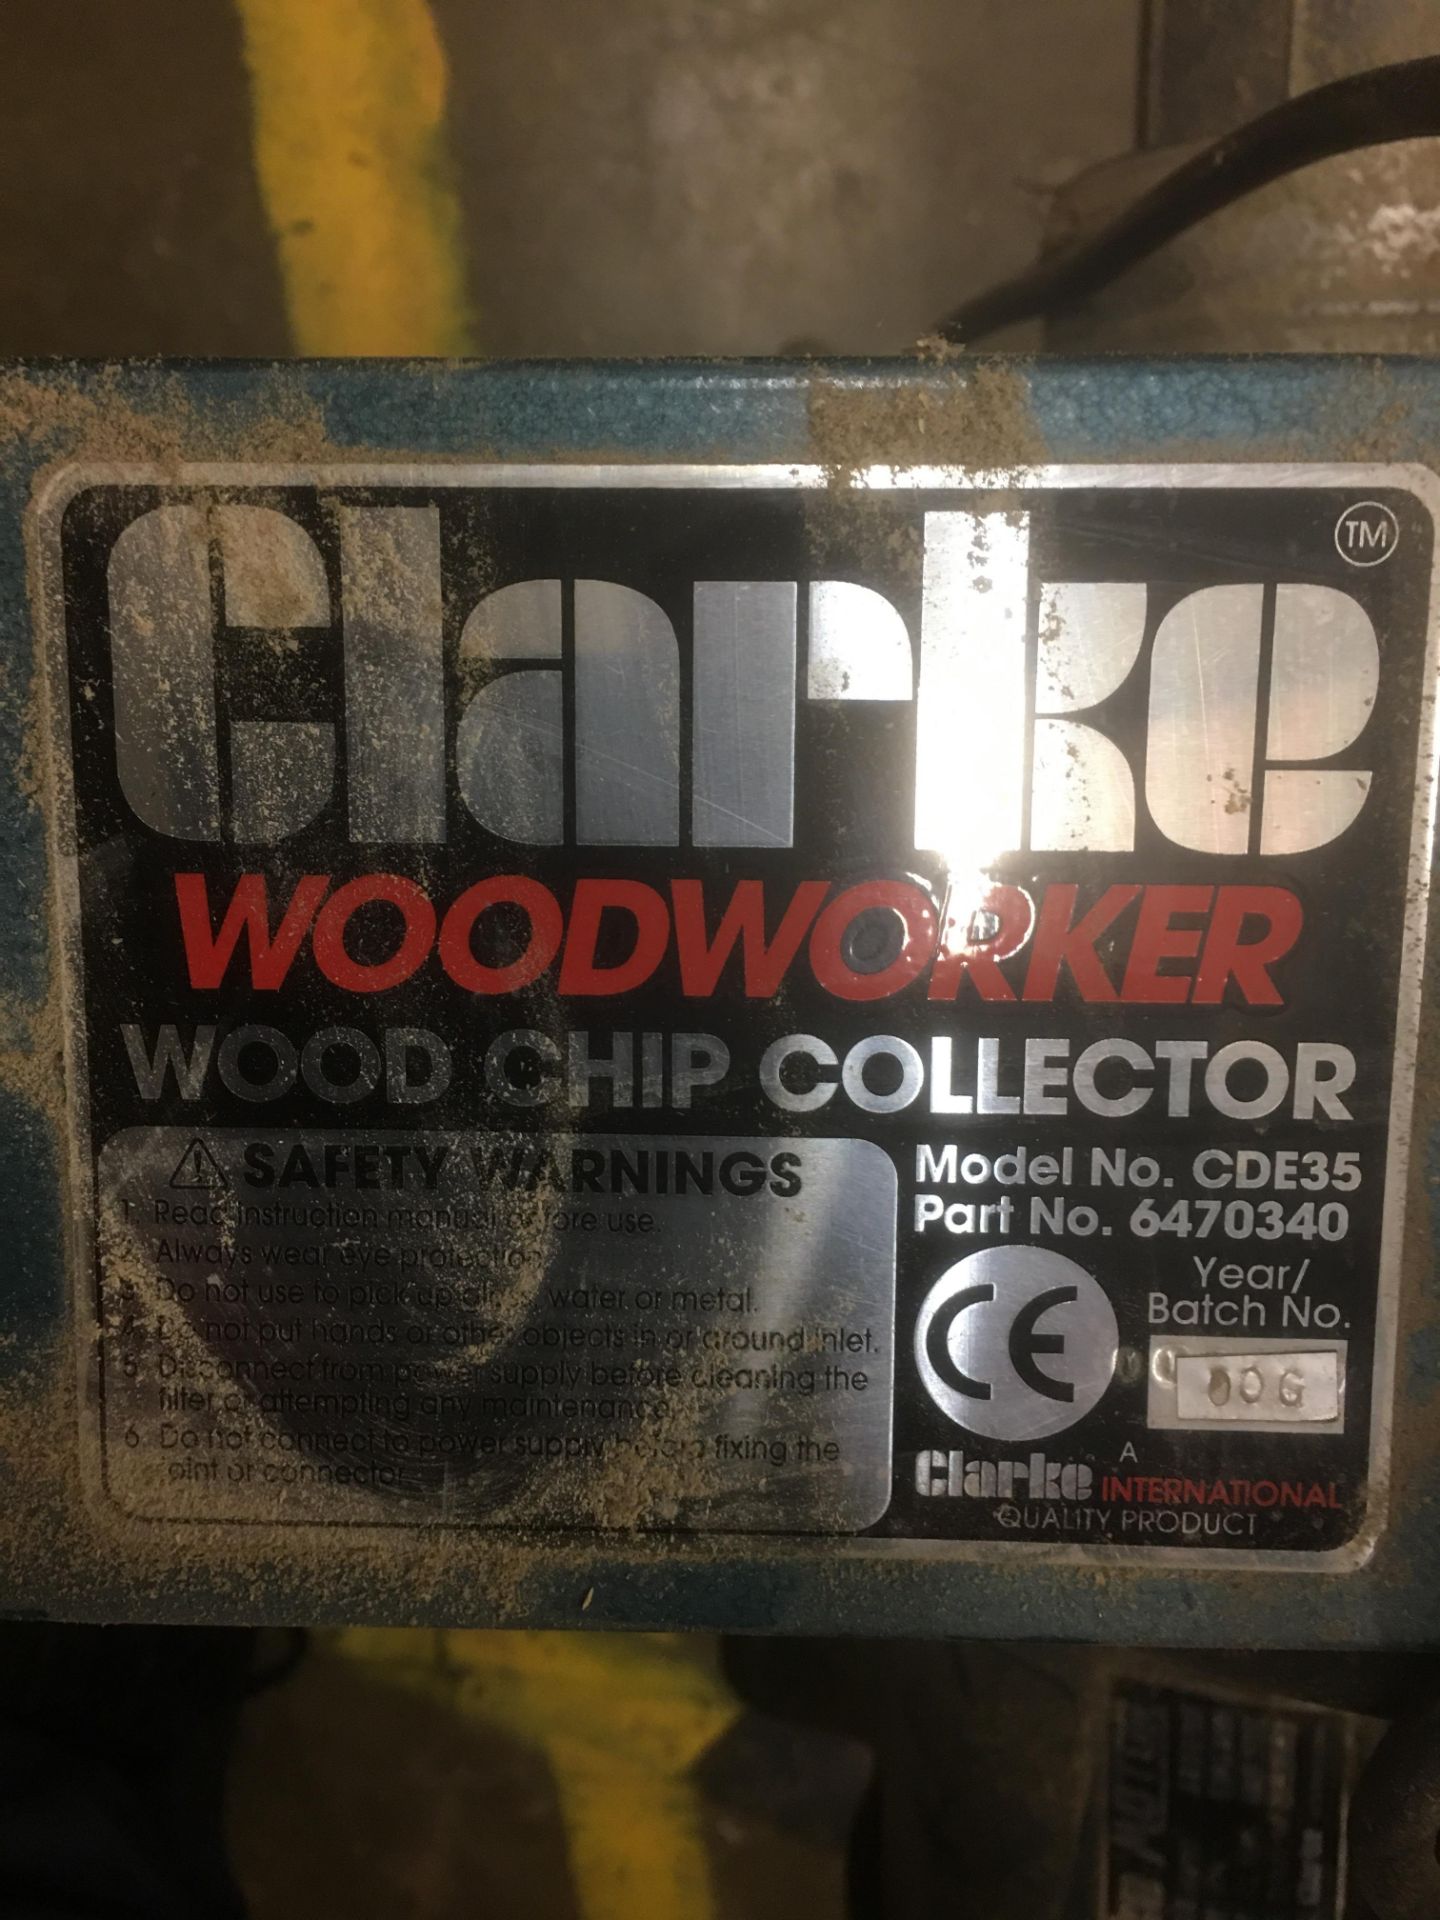 Clarke Woodworker Wood Chip Collector, 240V - Image 2 of 2